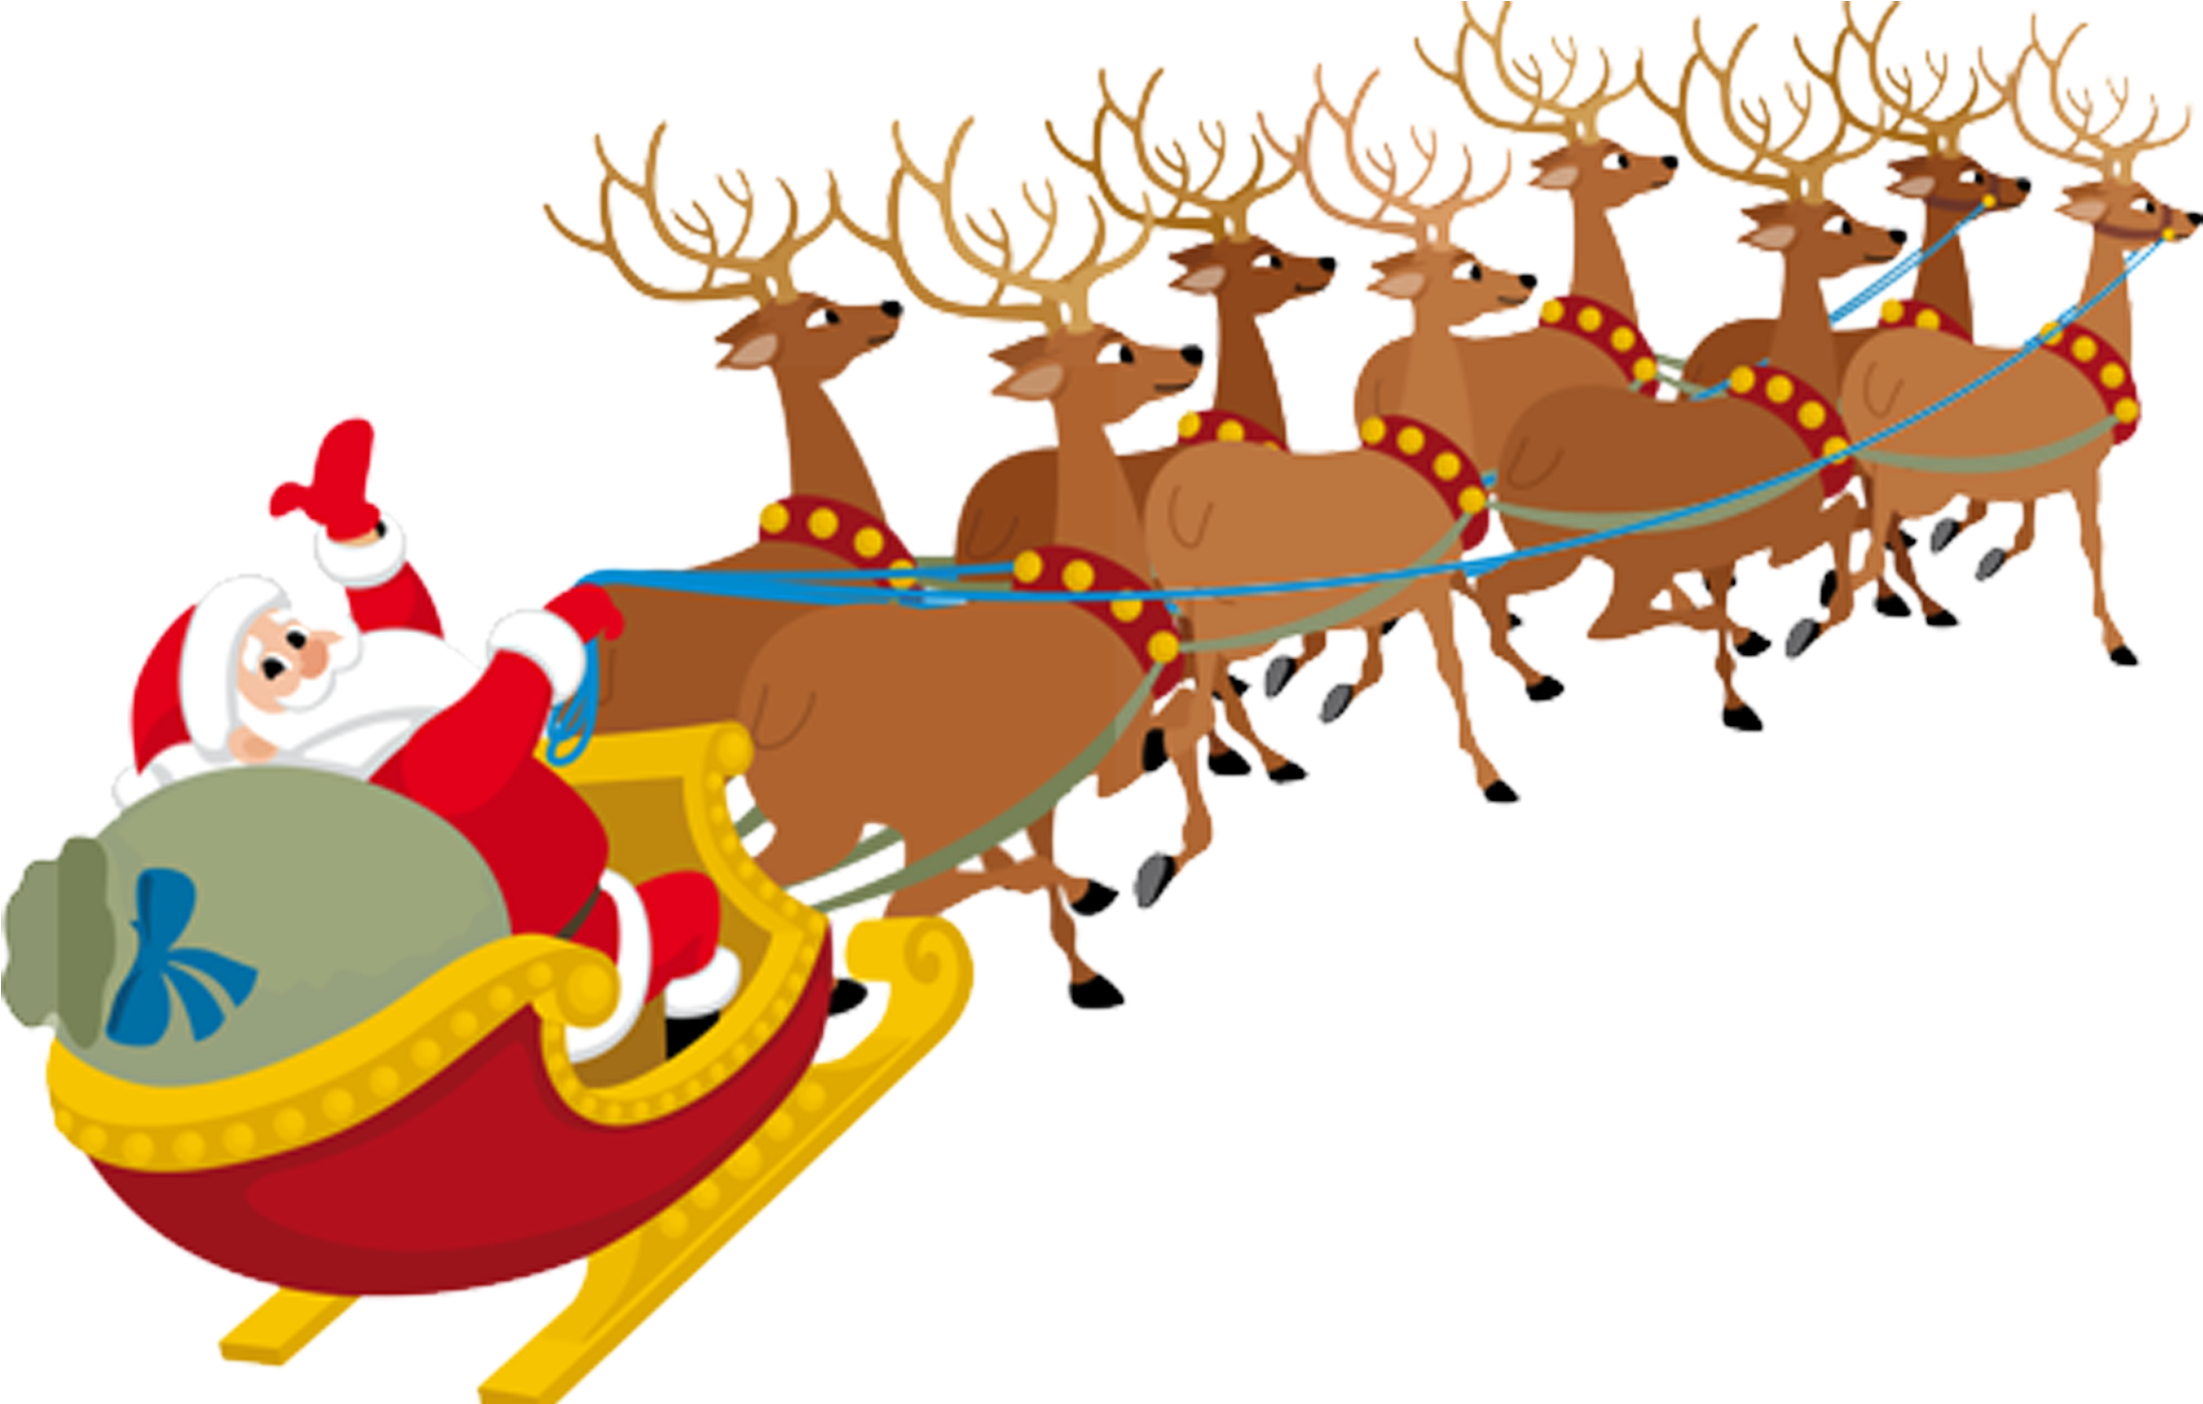 A Cartoon Of Santa Claus In A Sleigh With Reindeer